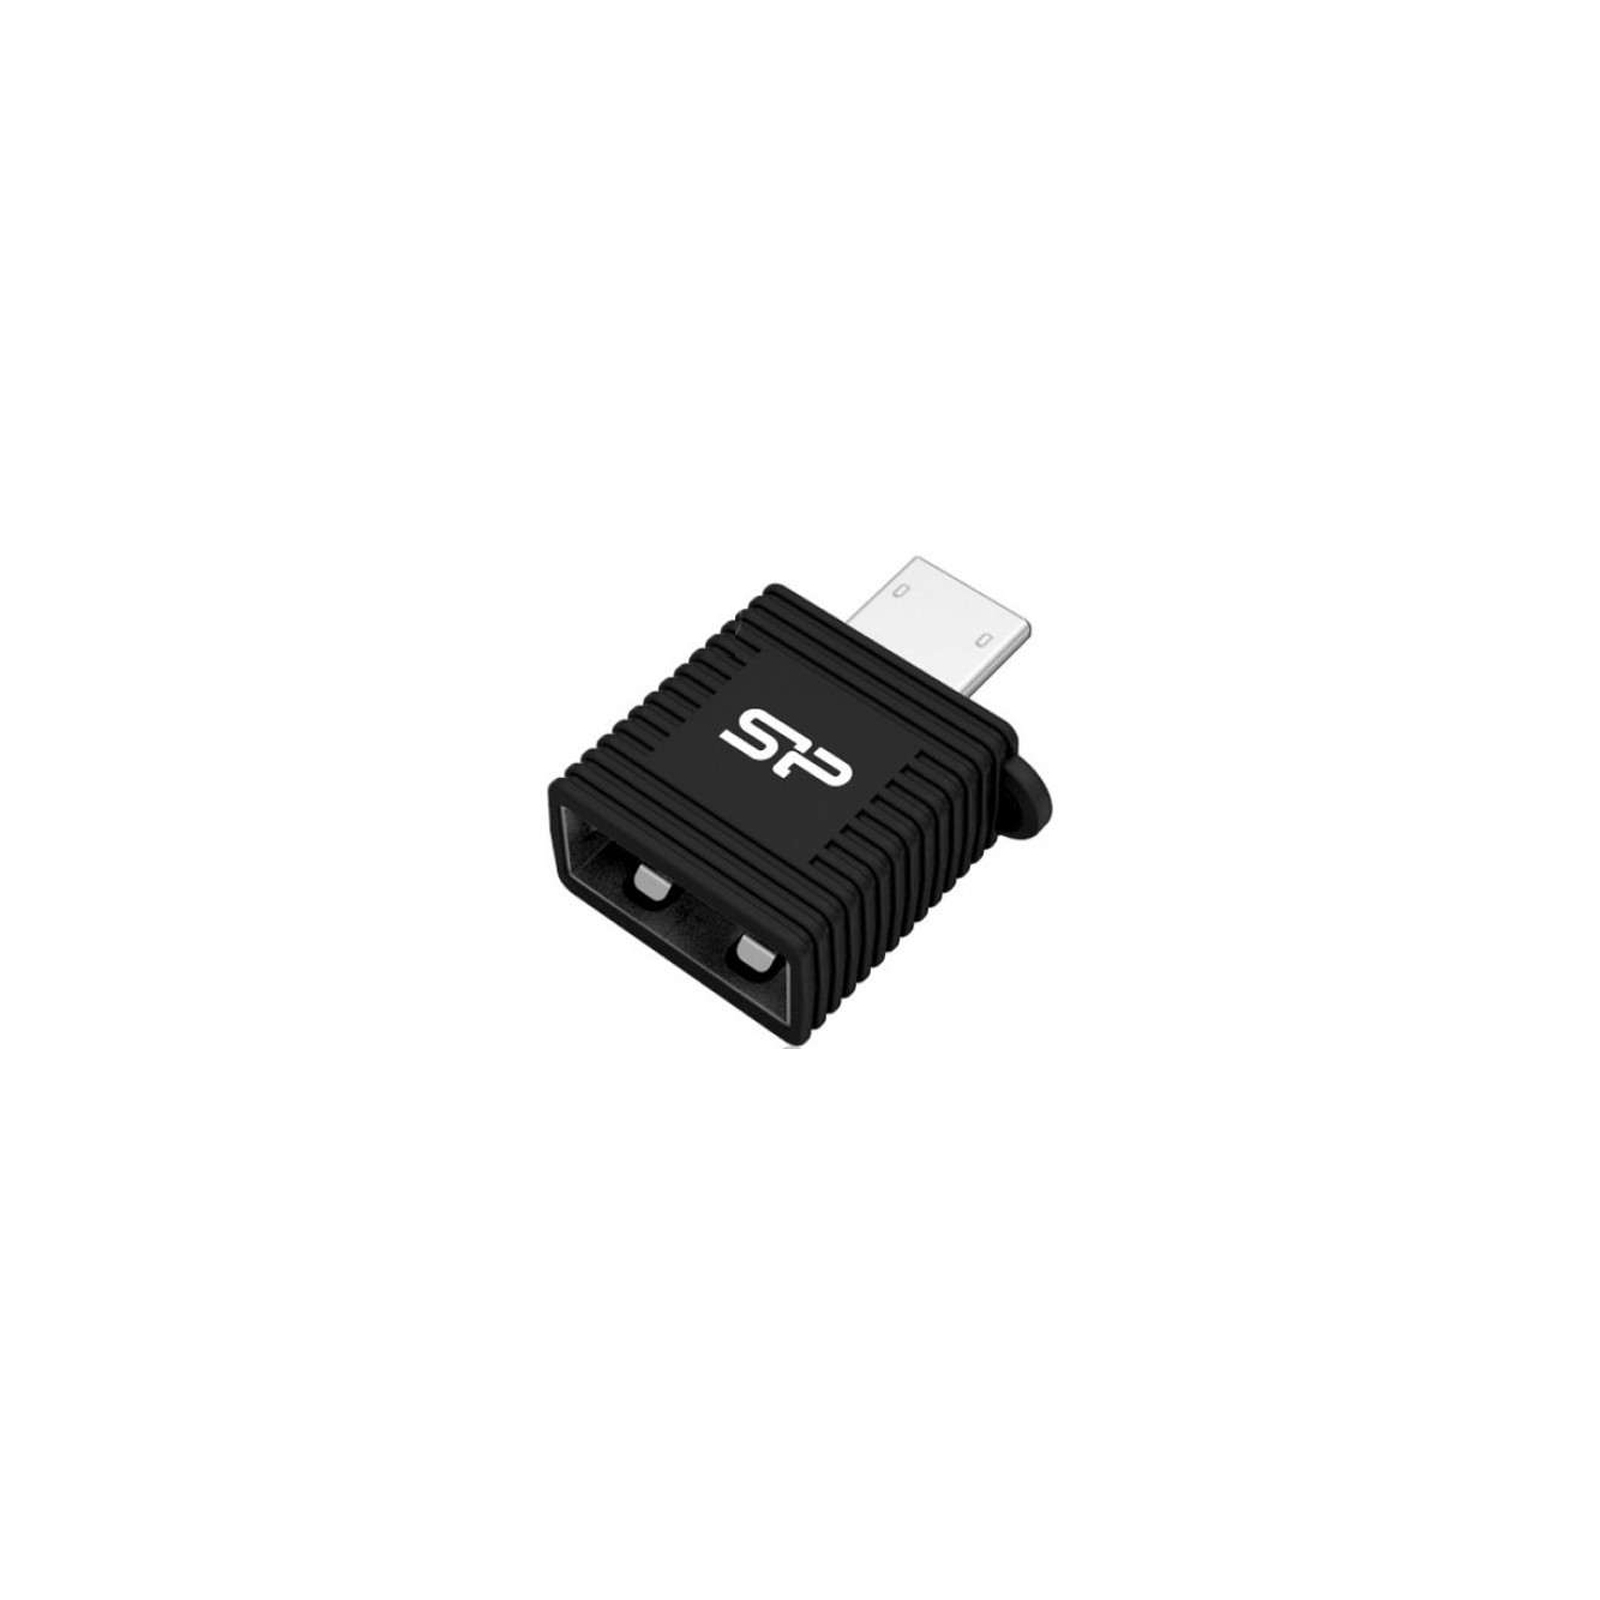 USB флеш накопитель Silicon Power 32GB Touch T01 USB 2.0/MicroUSB (SP032GBUF2TM1V1K) изображение 3